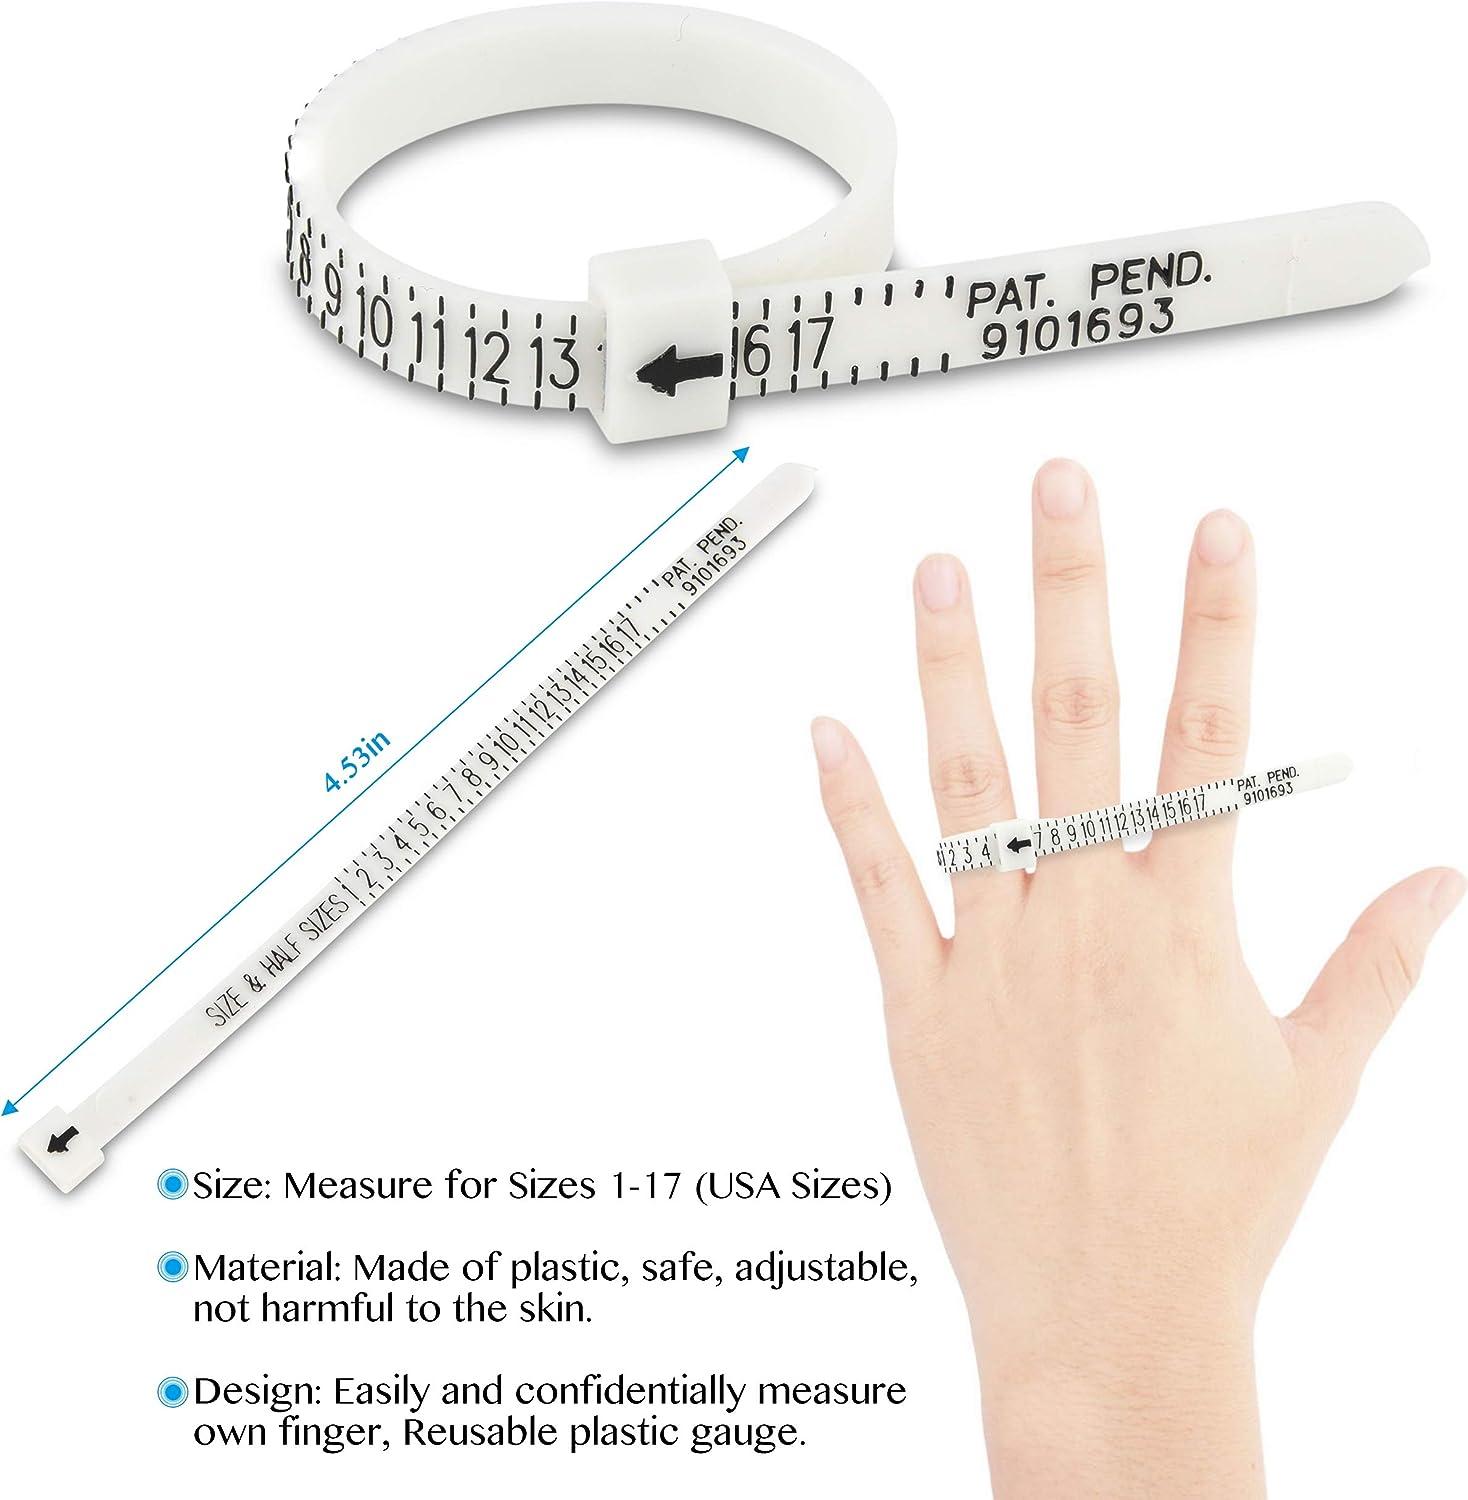 reusable plastic ring sizer - multisizer, measuring tool, finger